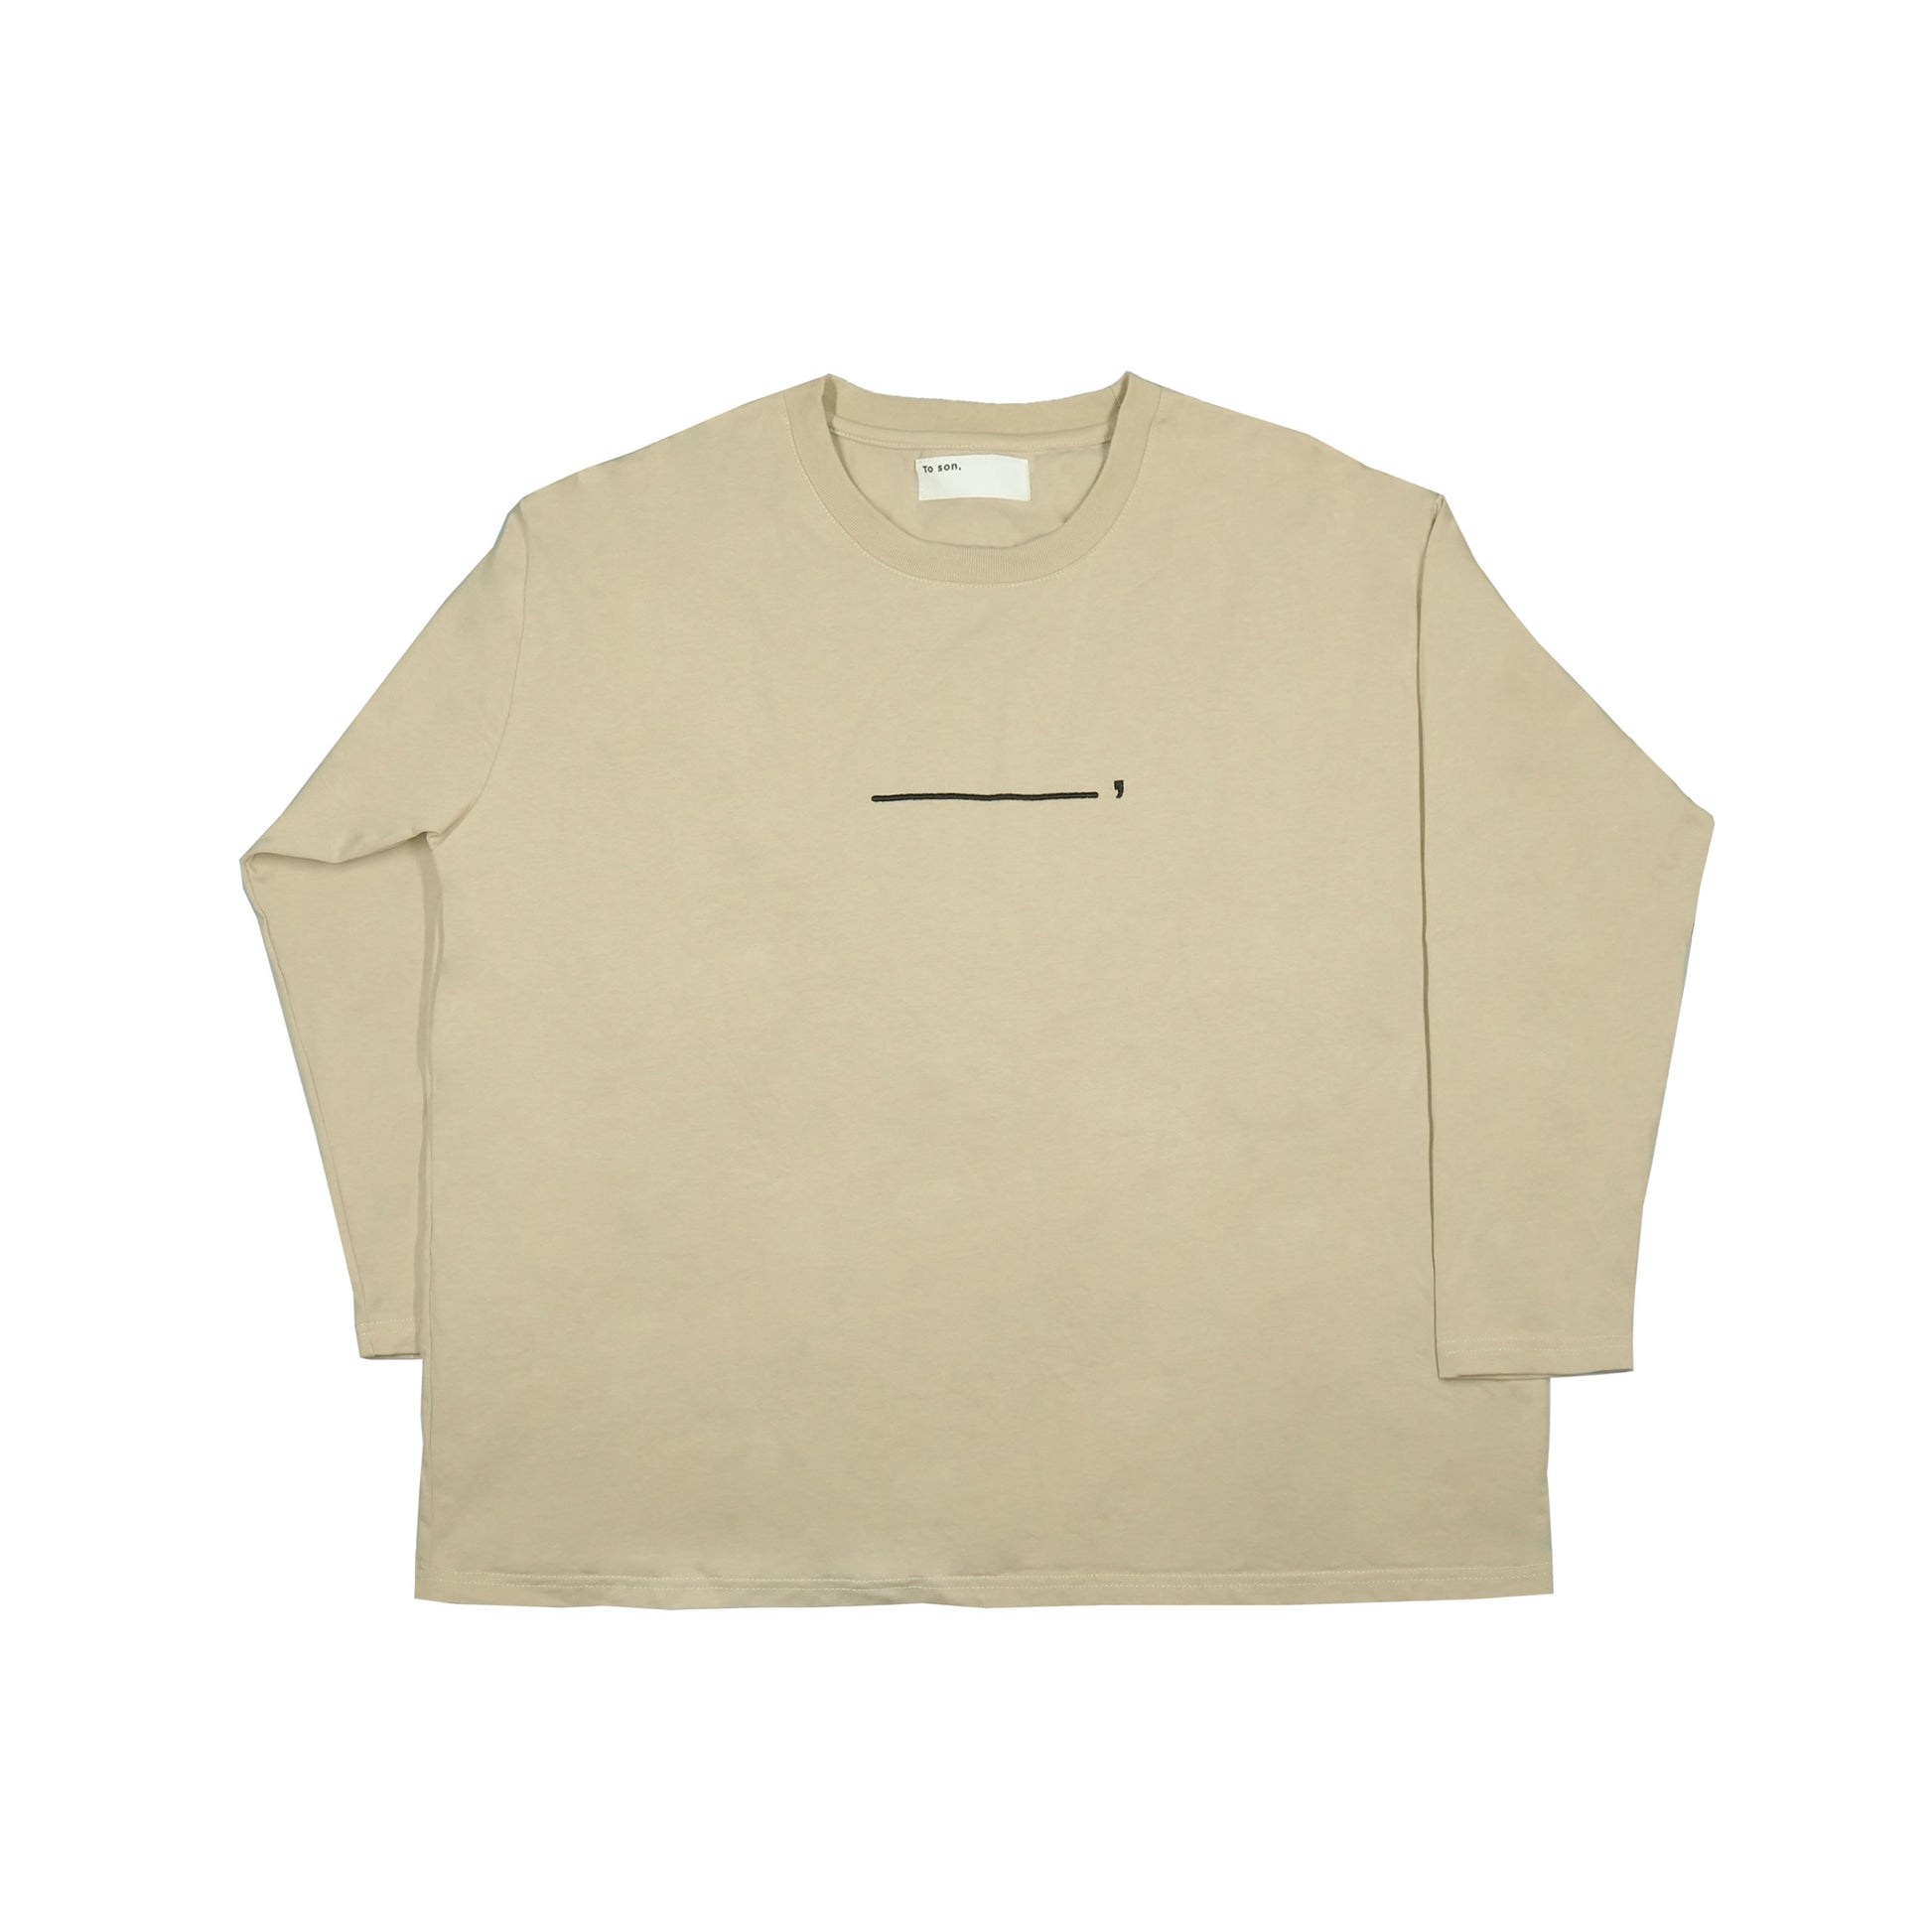 Toson, "Dinosaur" Patchwork Long Sleeve T-shirt - Khaki